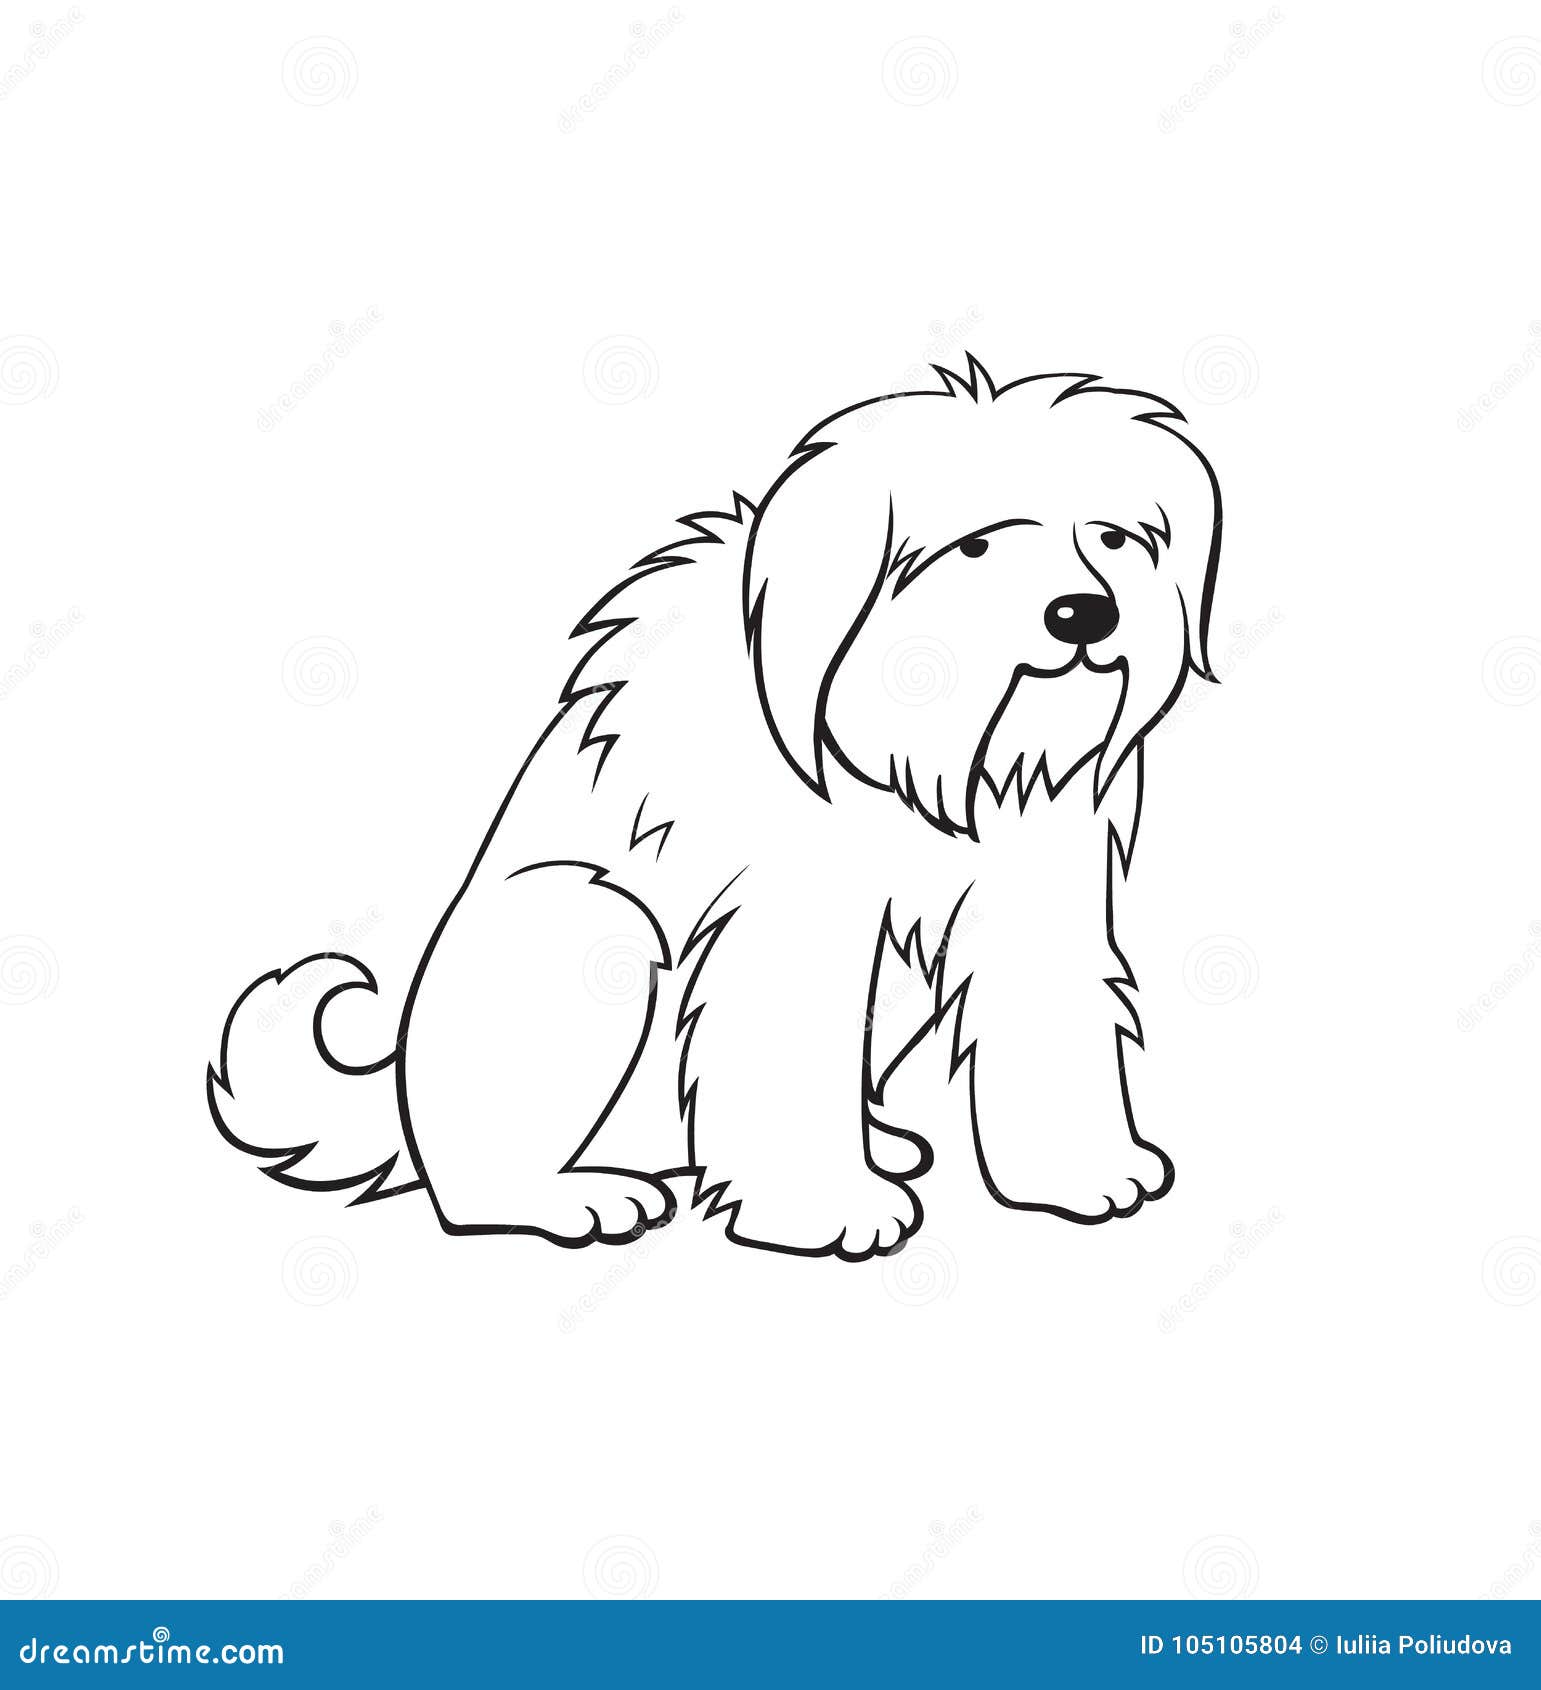 Cartoon dog stock illustration. Illustration of adorable - 105105804